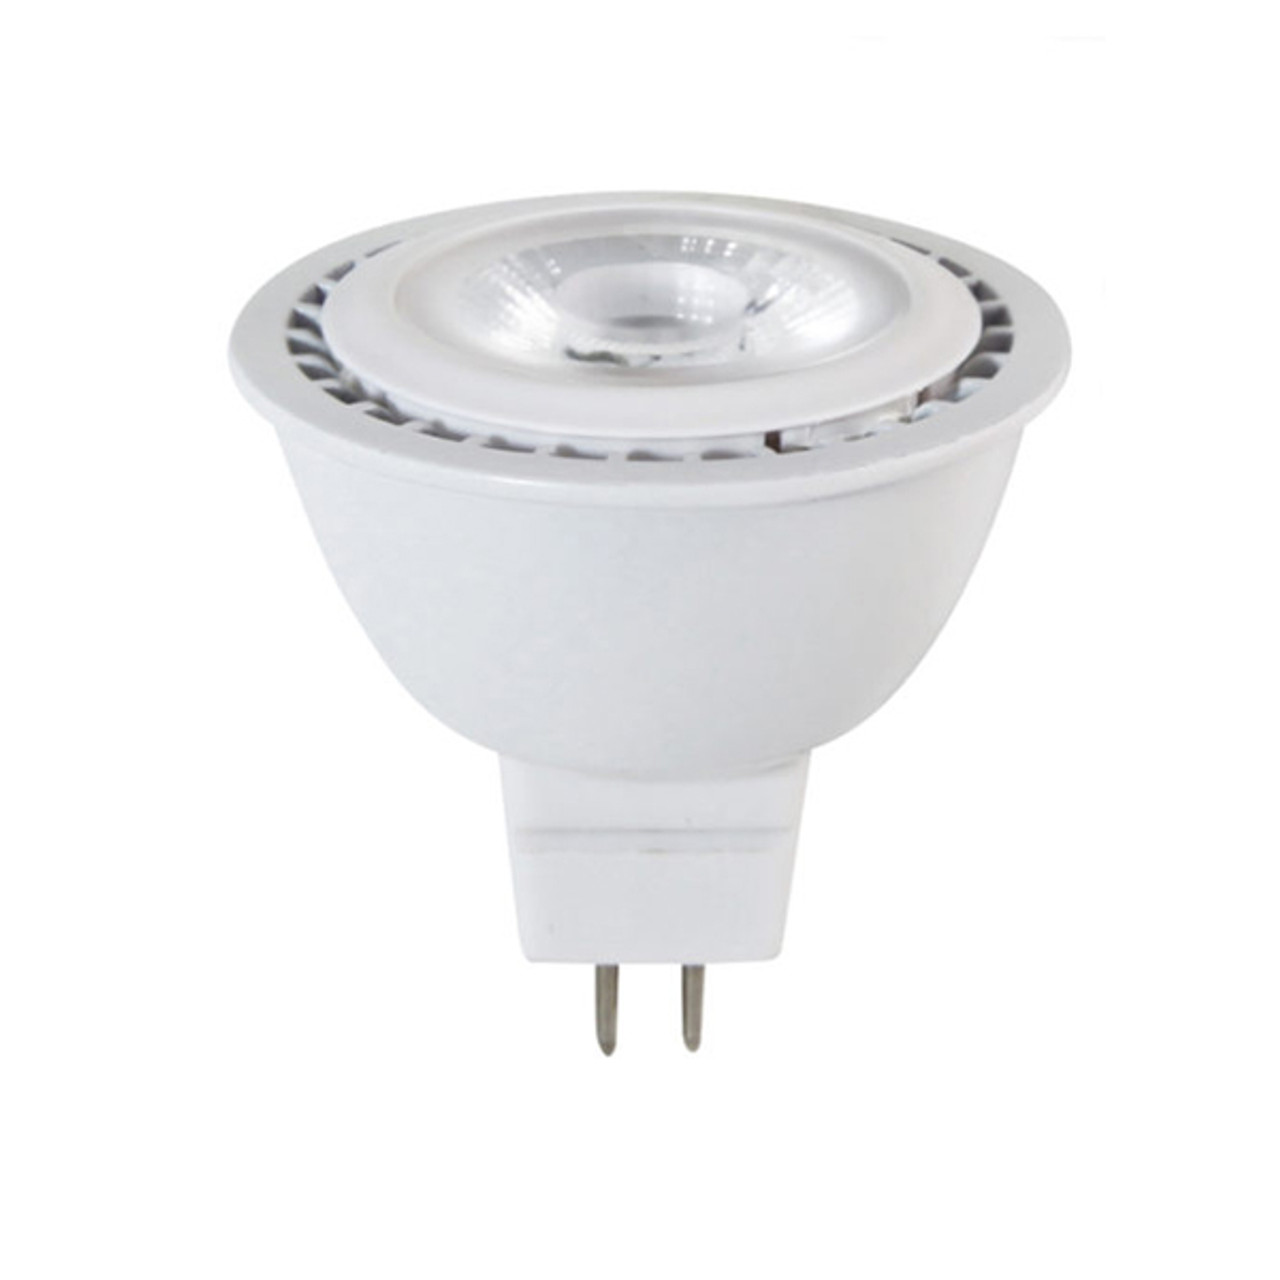 5 Watt LED MR16 Bulb G5.3 Base